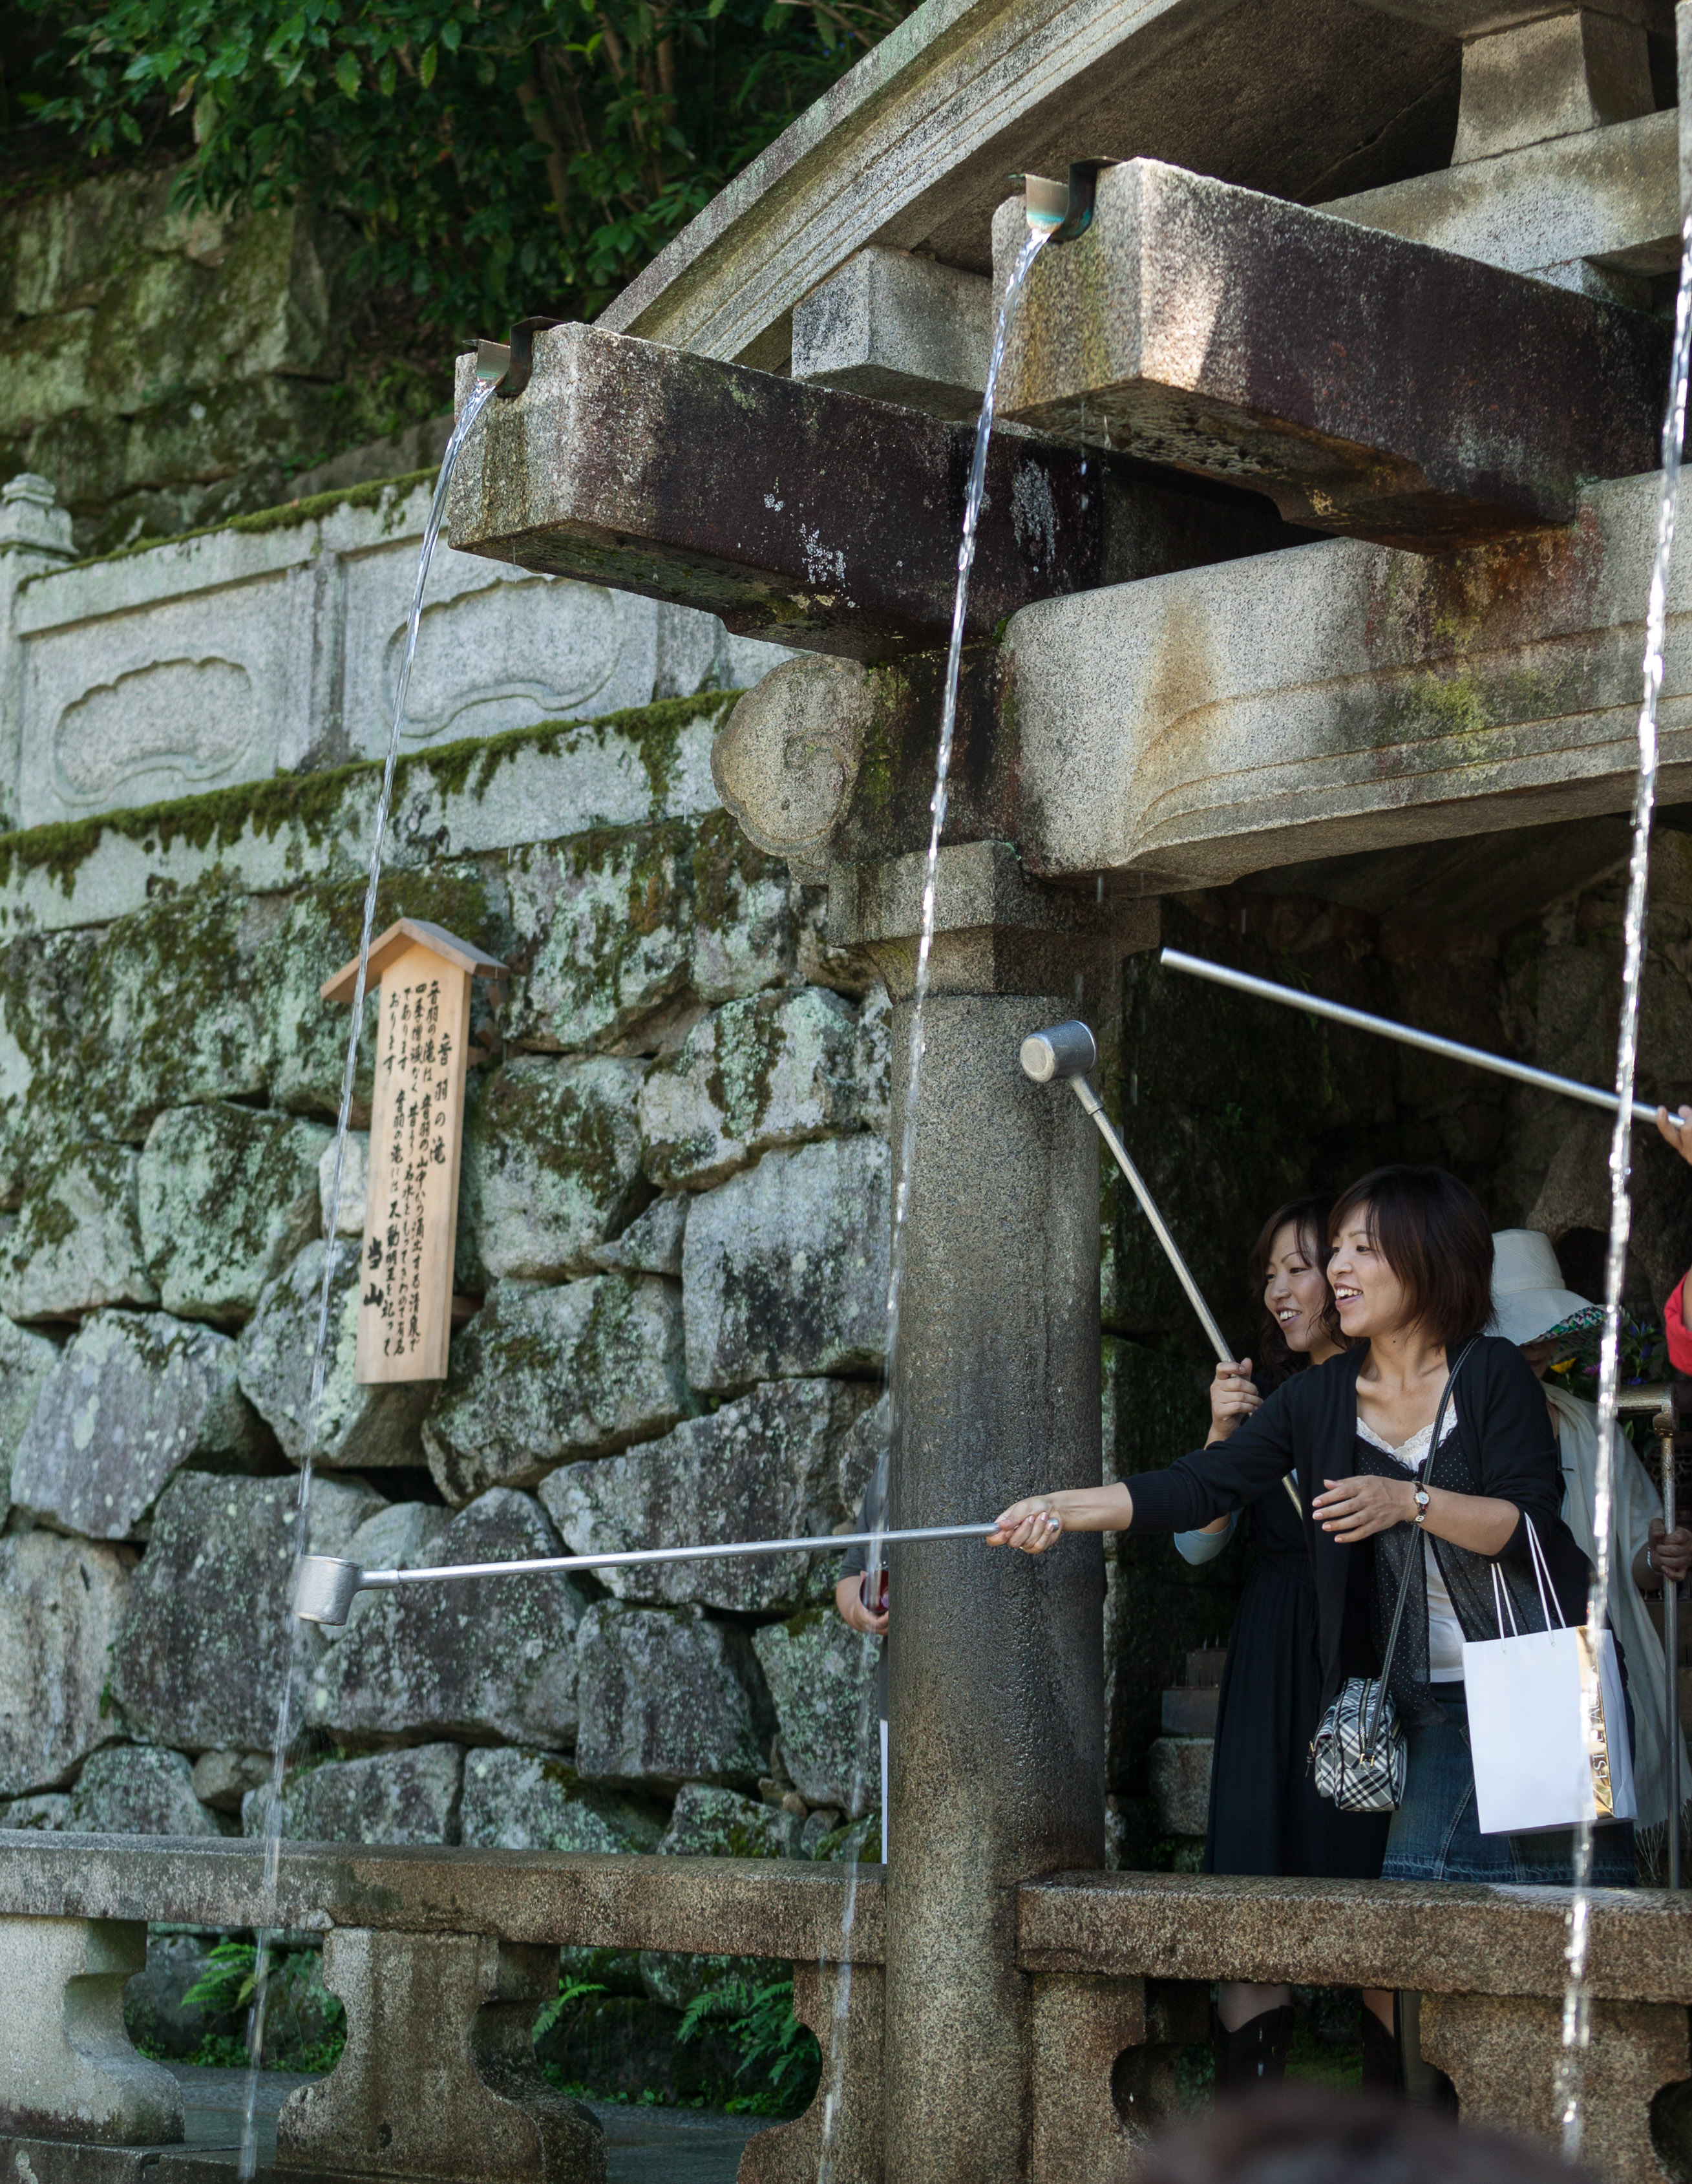 Kiyomizu Temple ("Pure Water Temple")